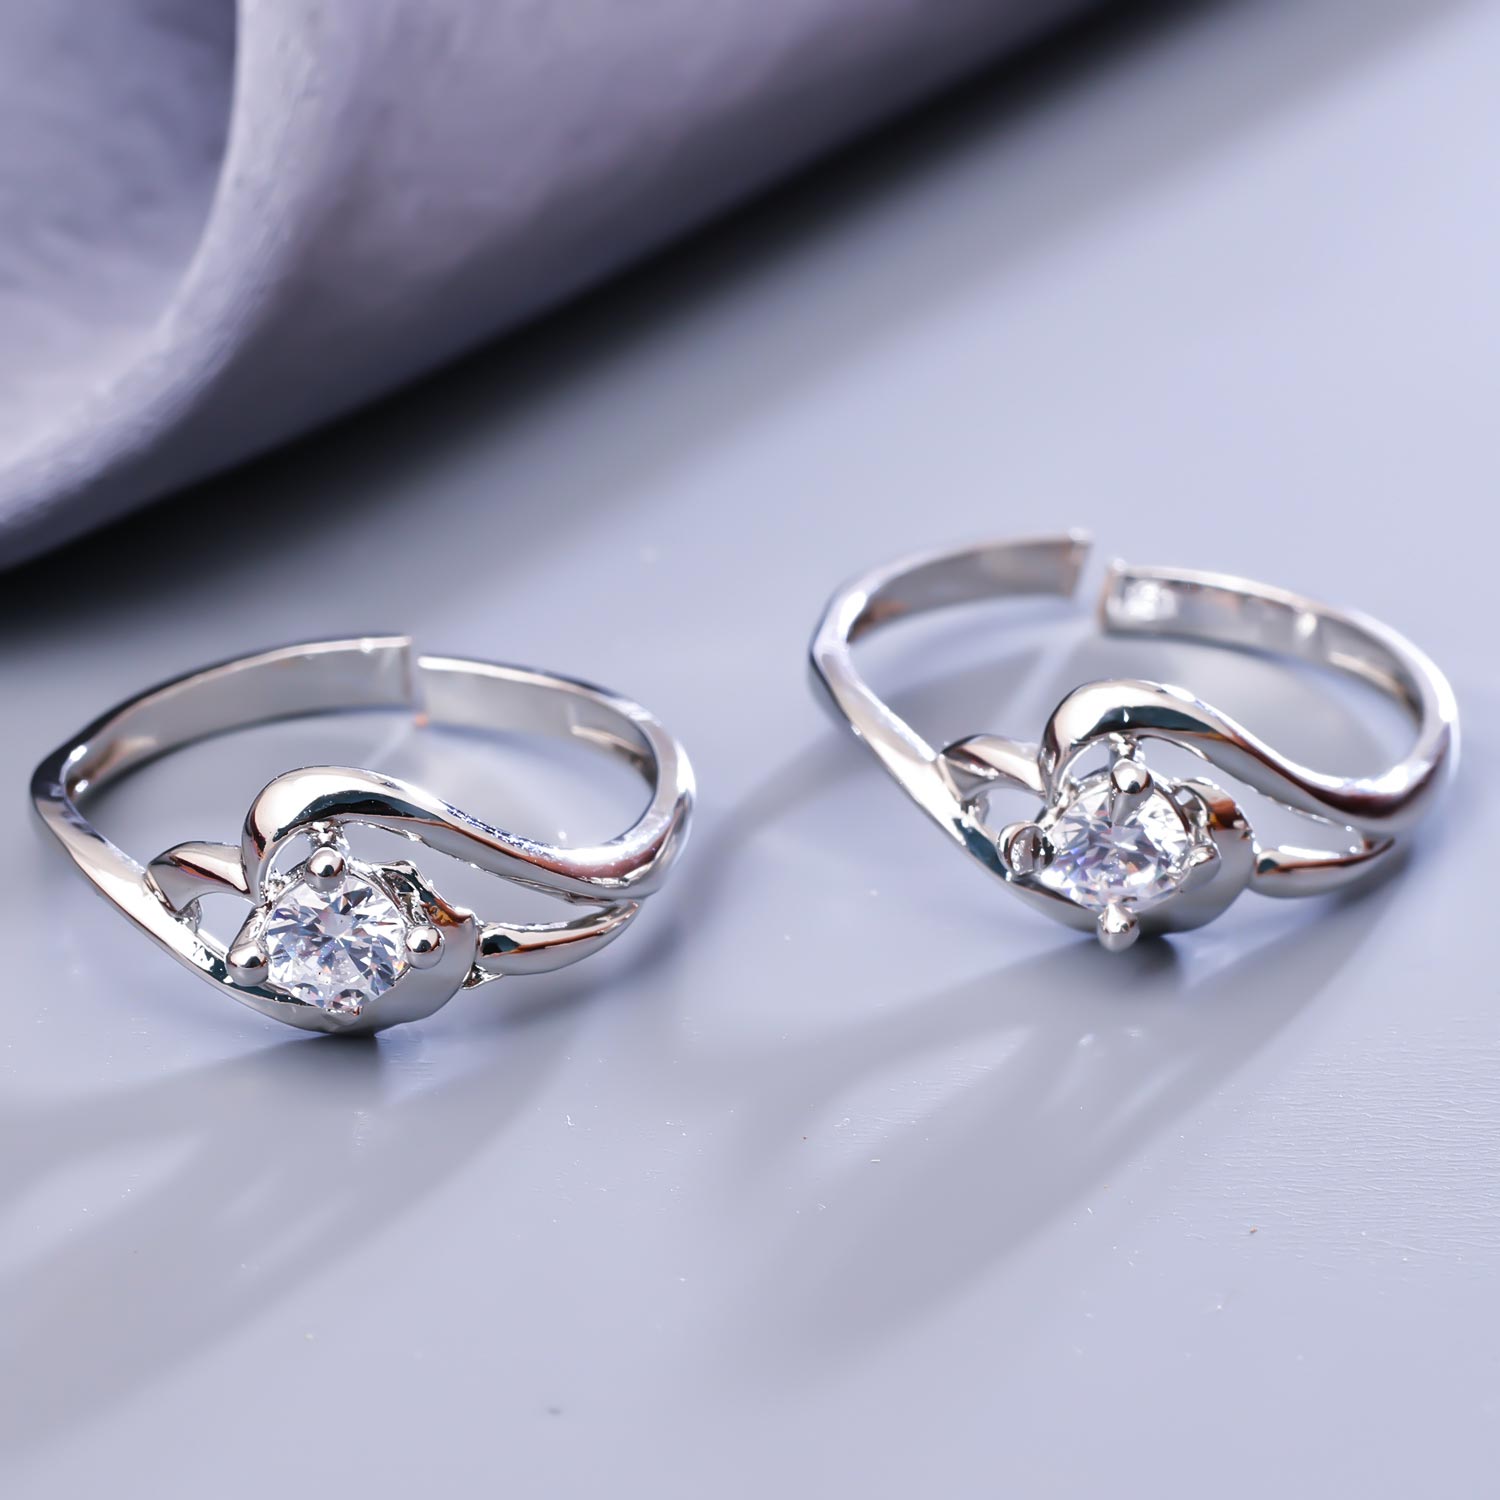 Buy - 925 Sterling Silver 3 Pcs Toe Rings Lightweight Cute Flower Heart  Band Ring Open Adjustable Foot Toe Ring for Women | TrueSilver